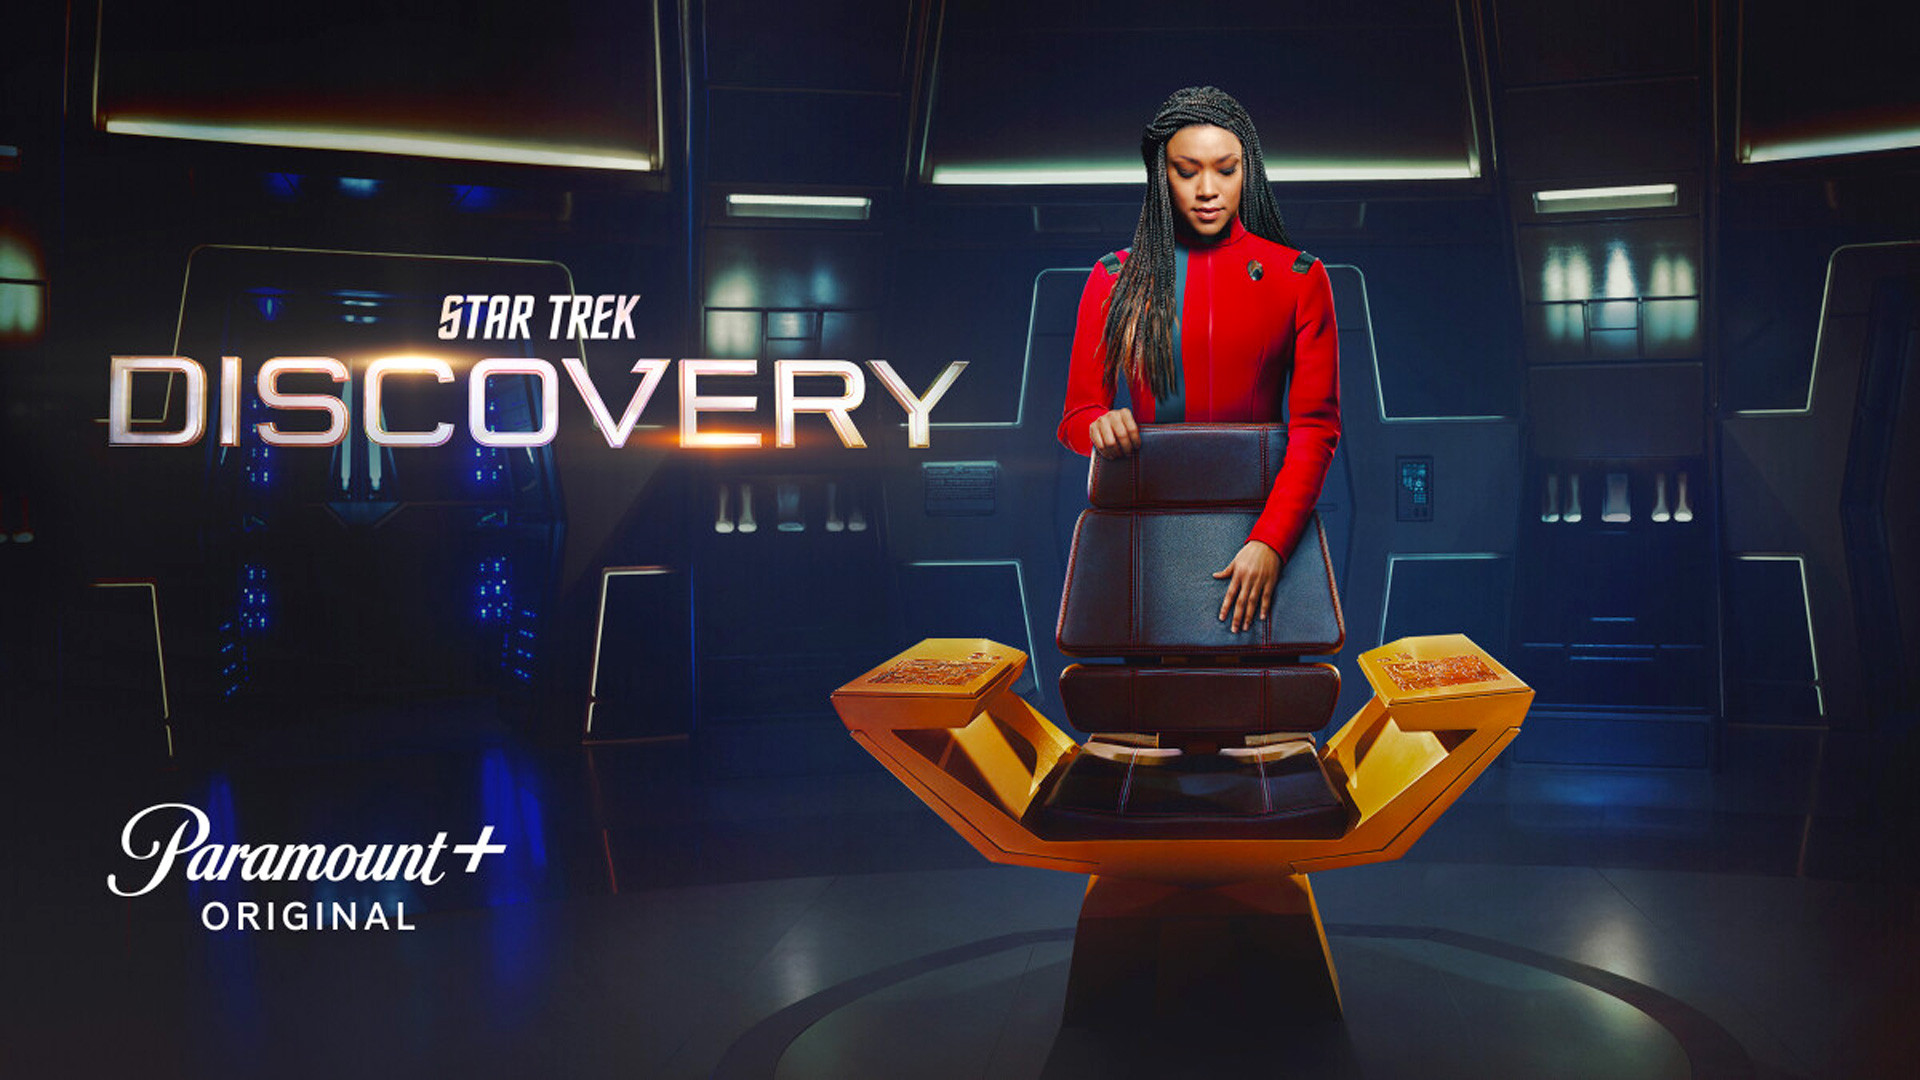 promo poster for Star Trek Discovery